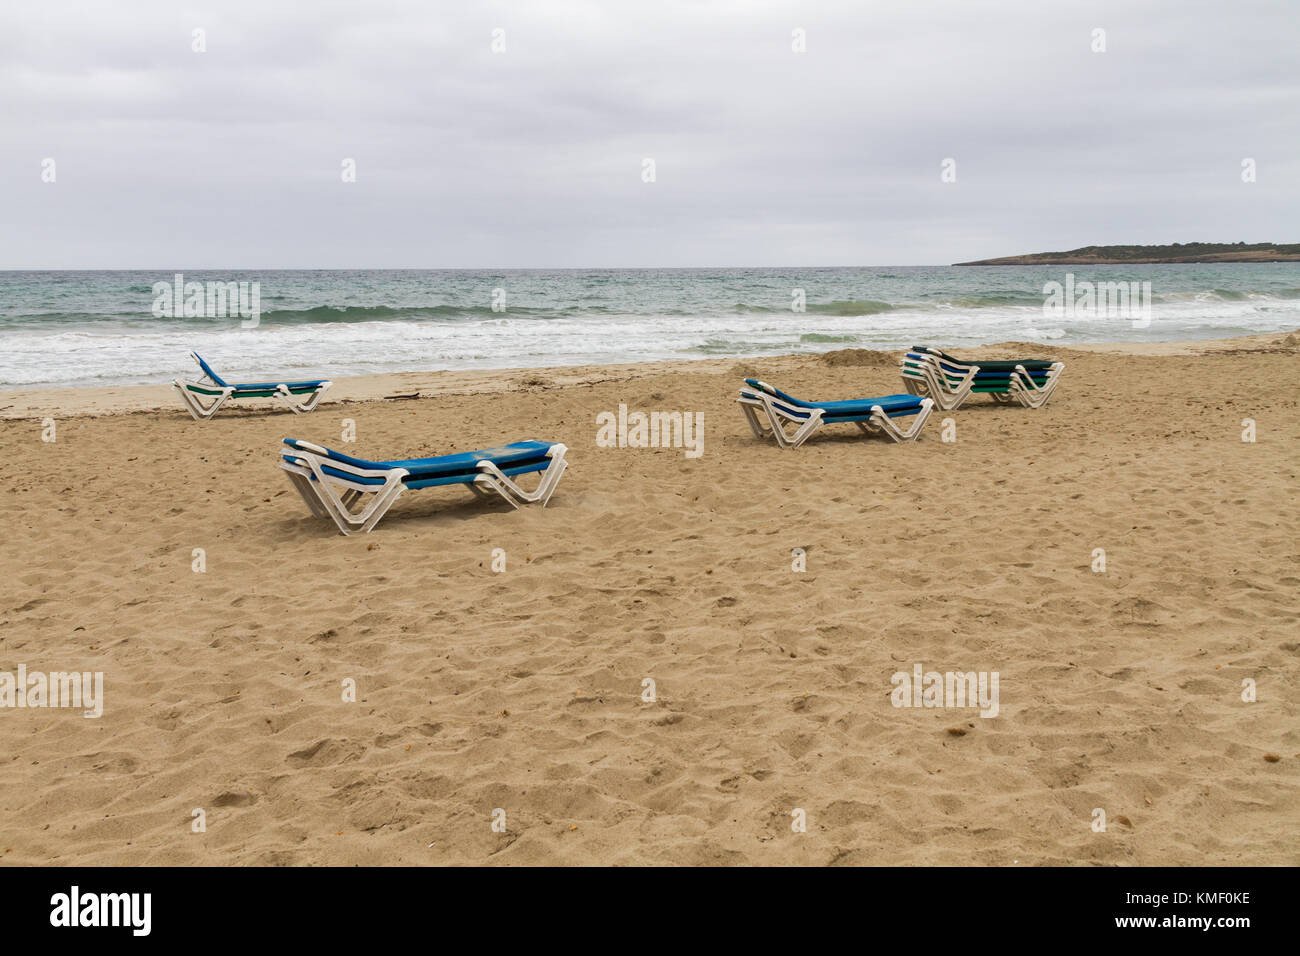 empty sunbeds, out of season, on beach on a rainy day Stock Photo